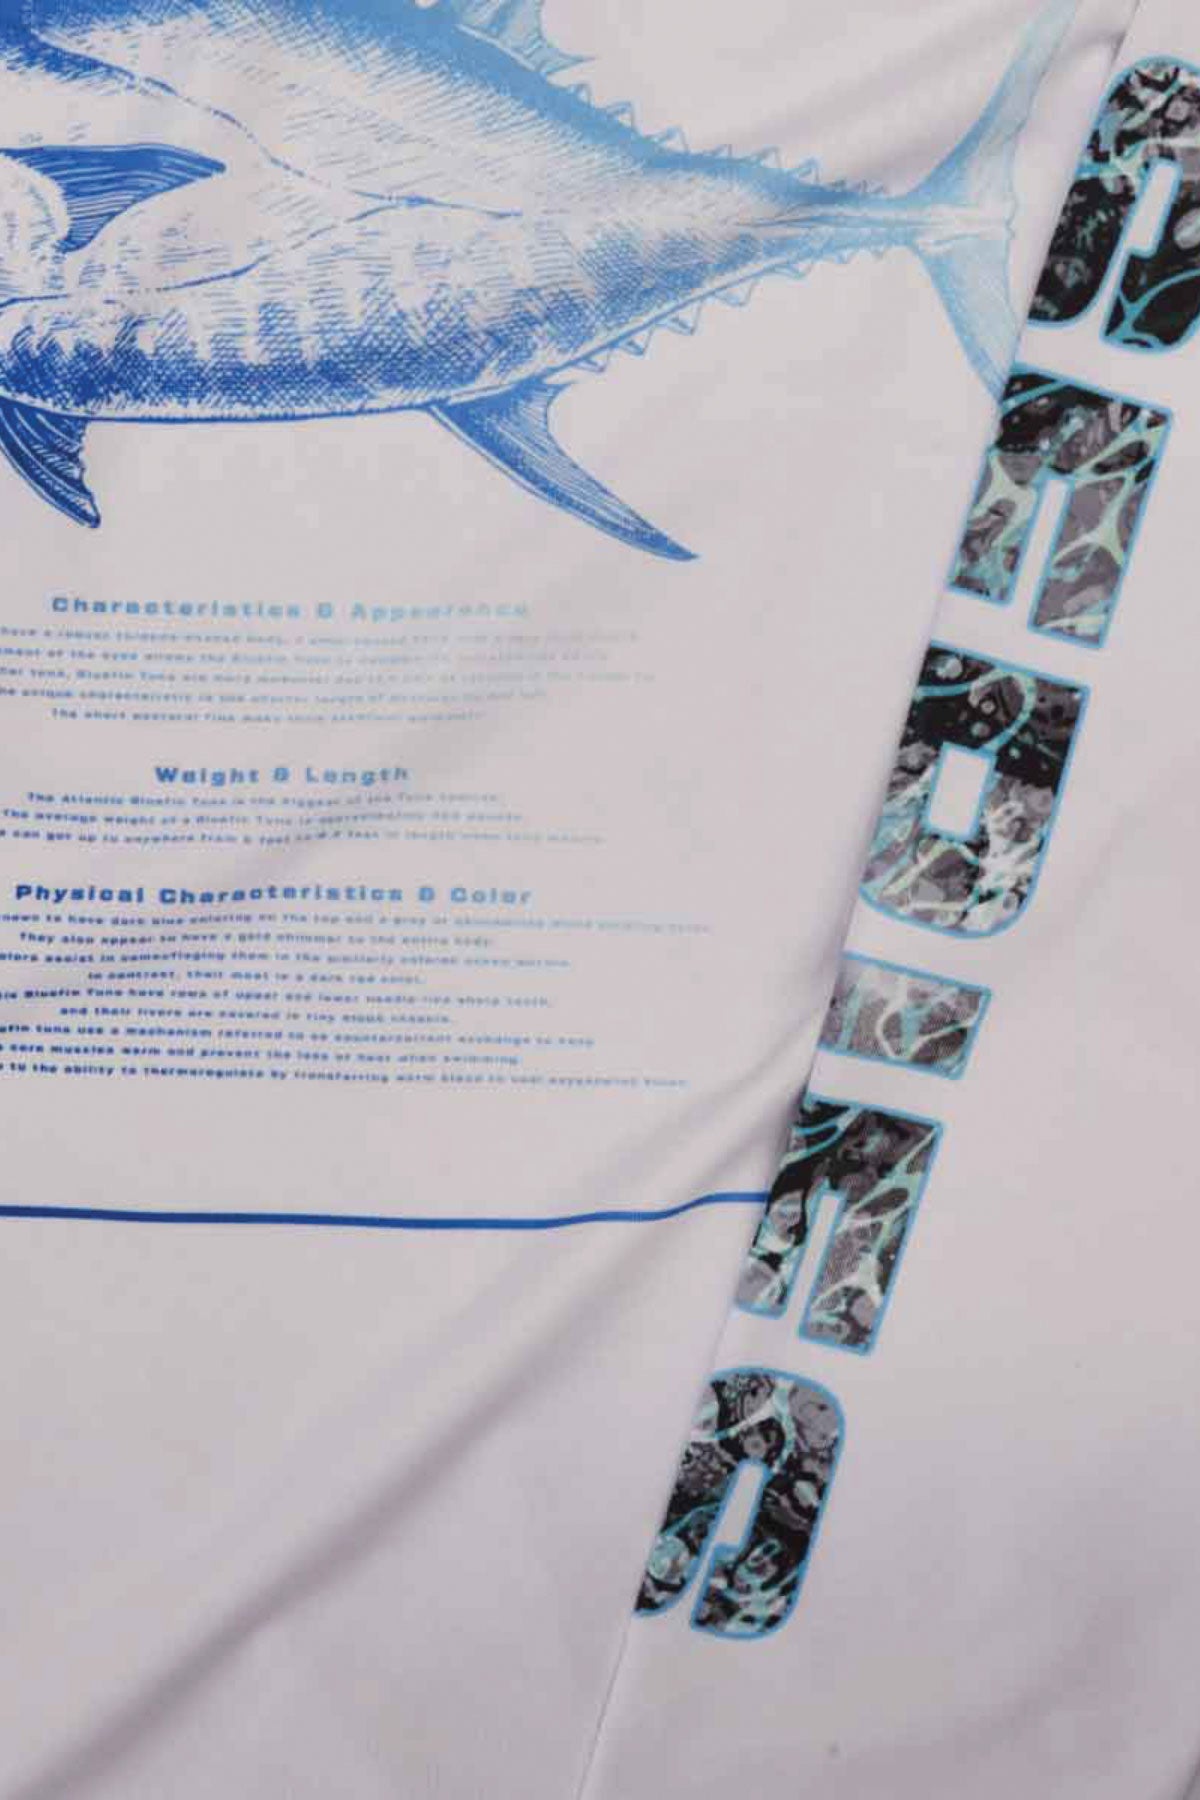 Apex Crew Neck  Long Sleeve Fishing Shirt - Tuna Fish-White - Stafu Pro Series